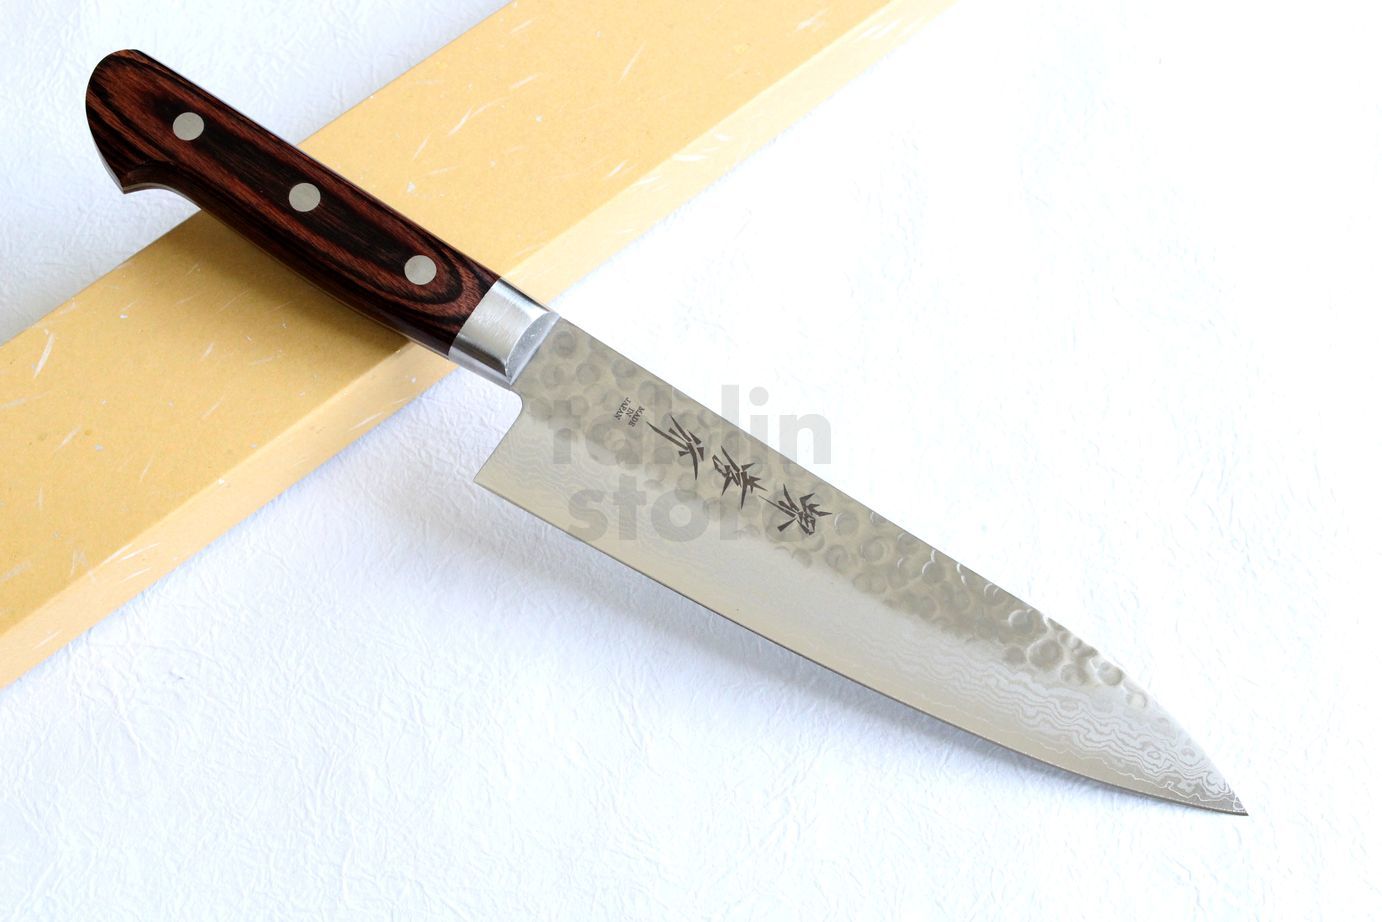 Professional Japanese Vg10 Damascus Super Steel Kitchen Knife